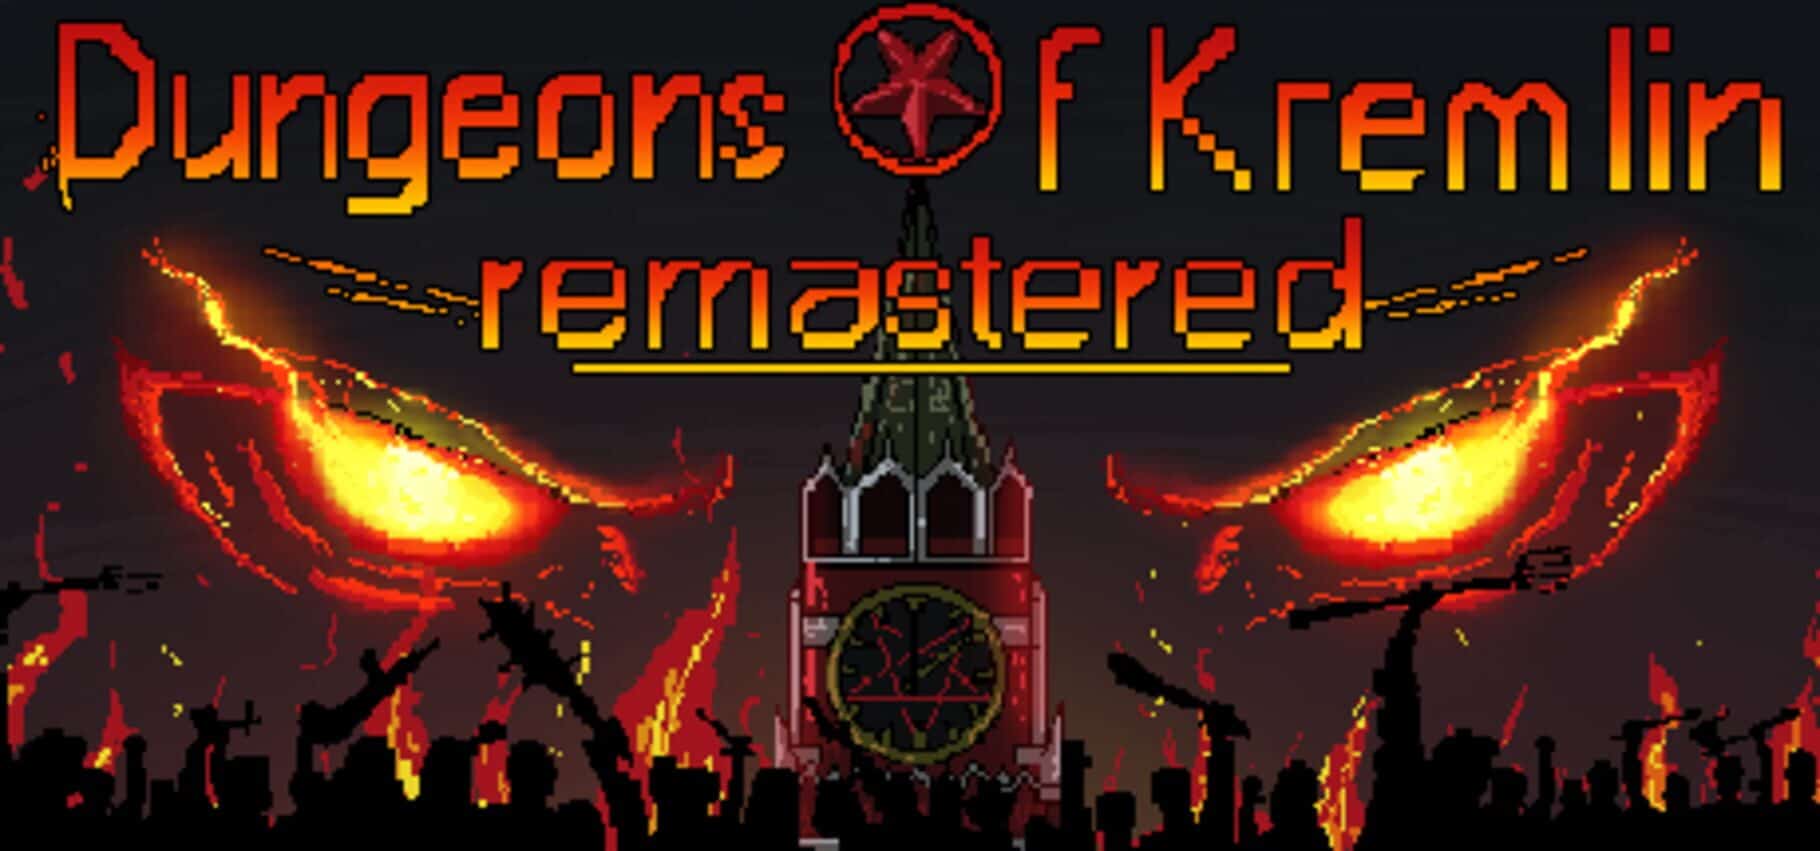 Dungeons Of Kremlin: Remastered